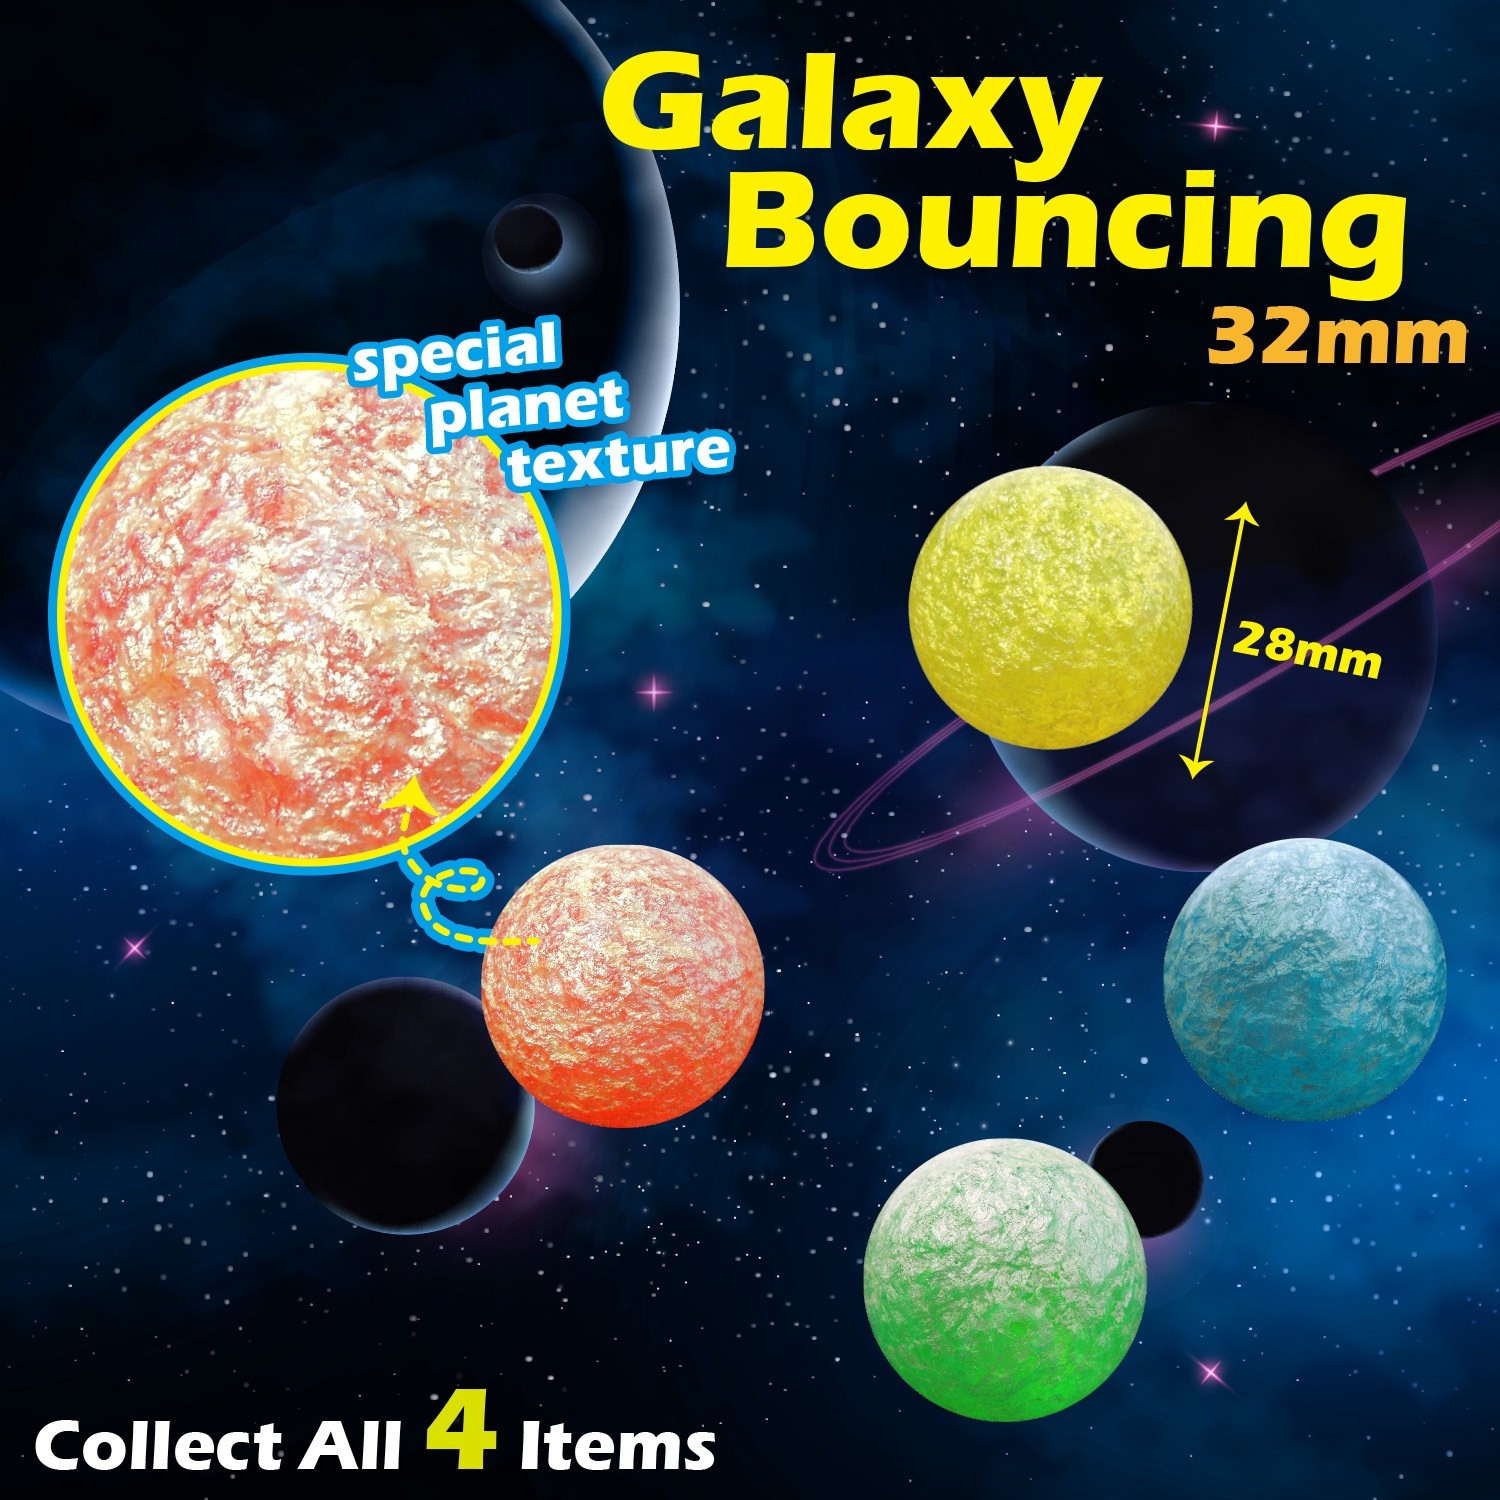 Galaxy Bouncing Ball 32mm